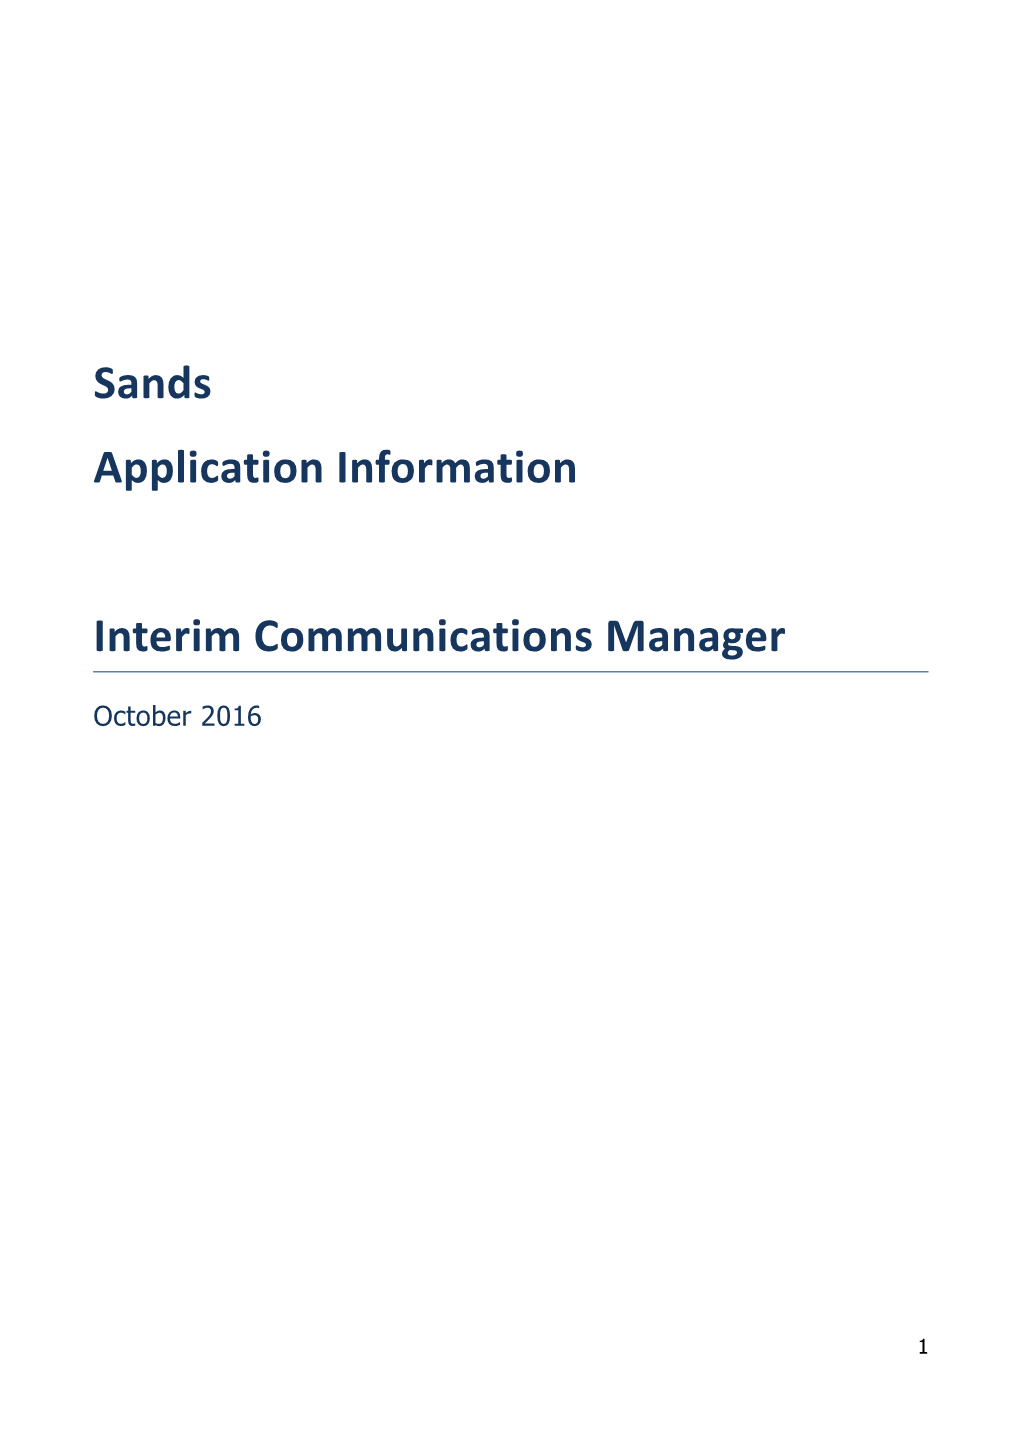 Interim Communications Manager